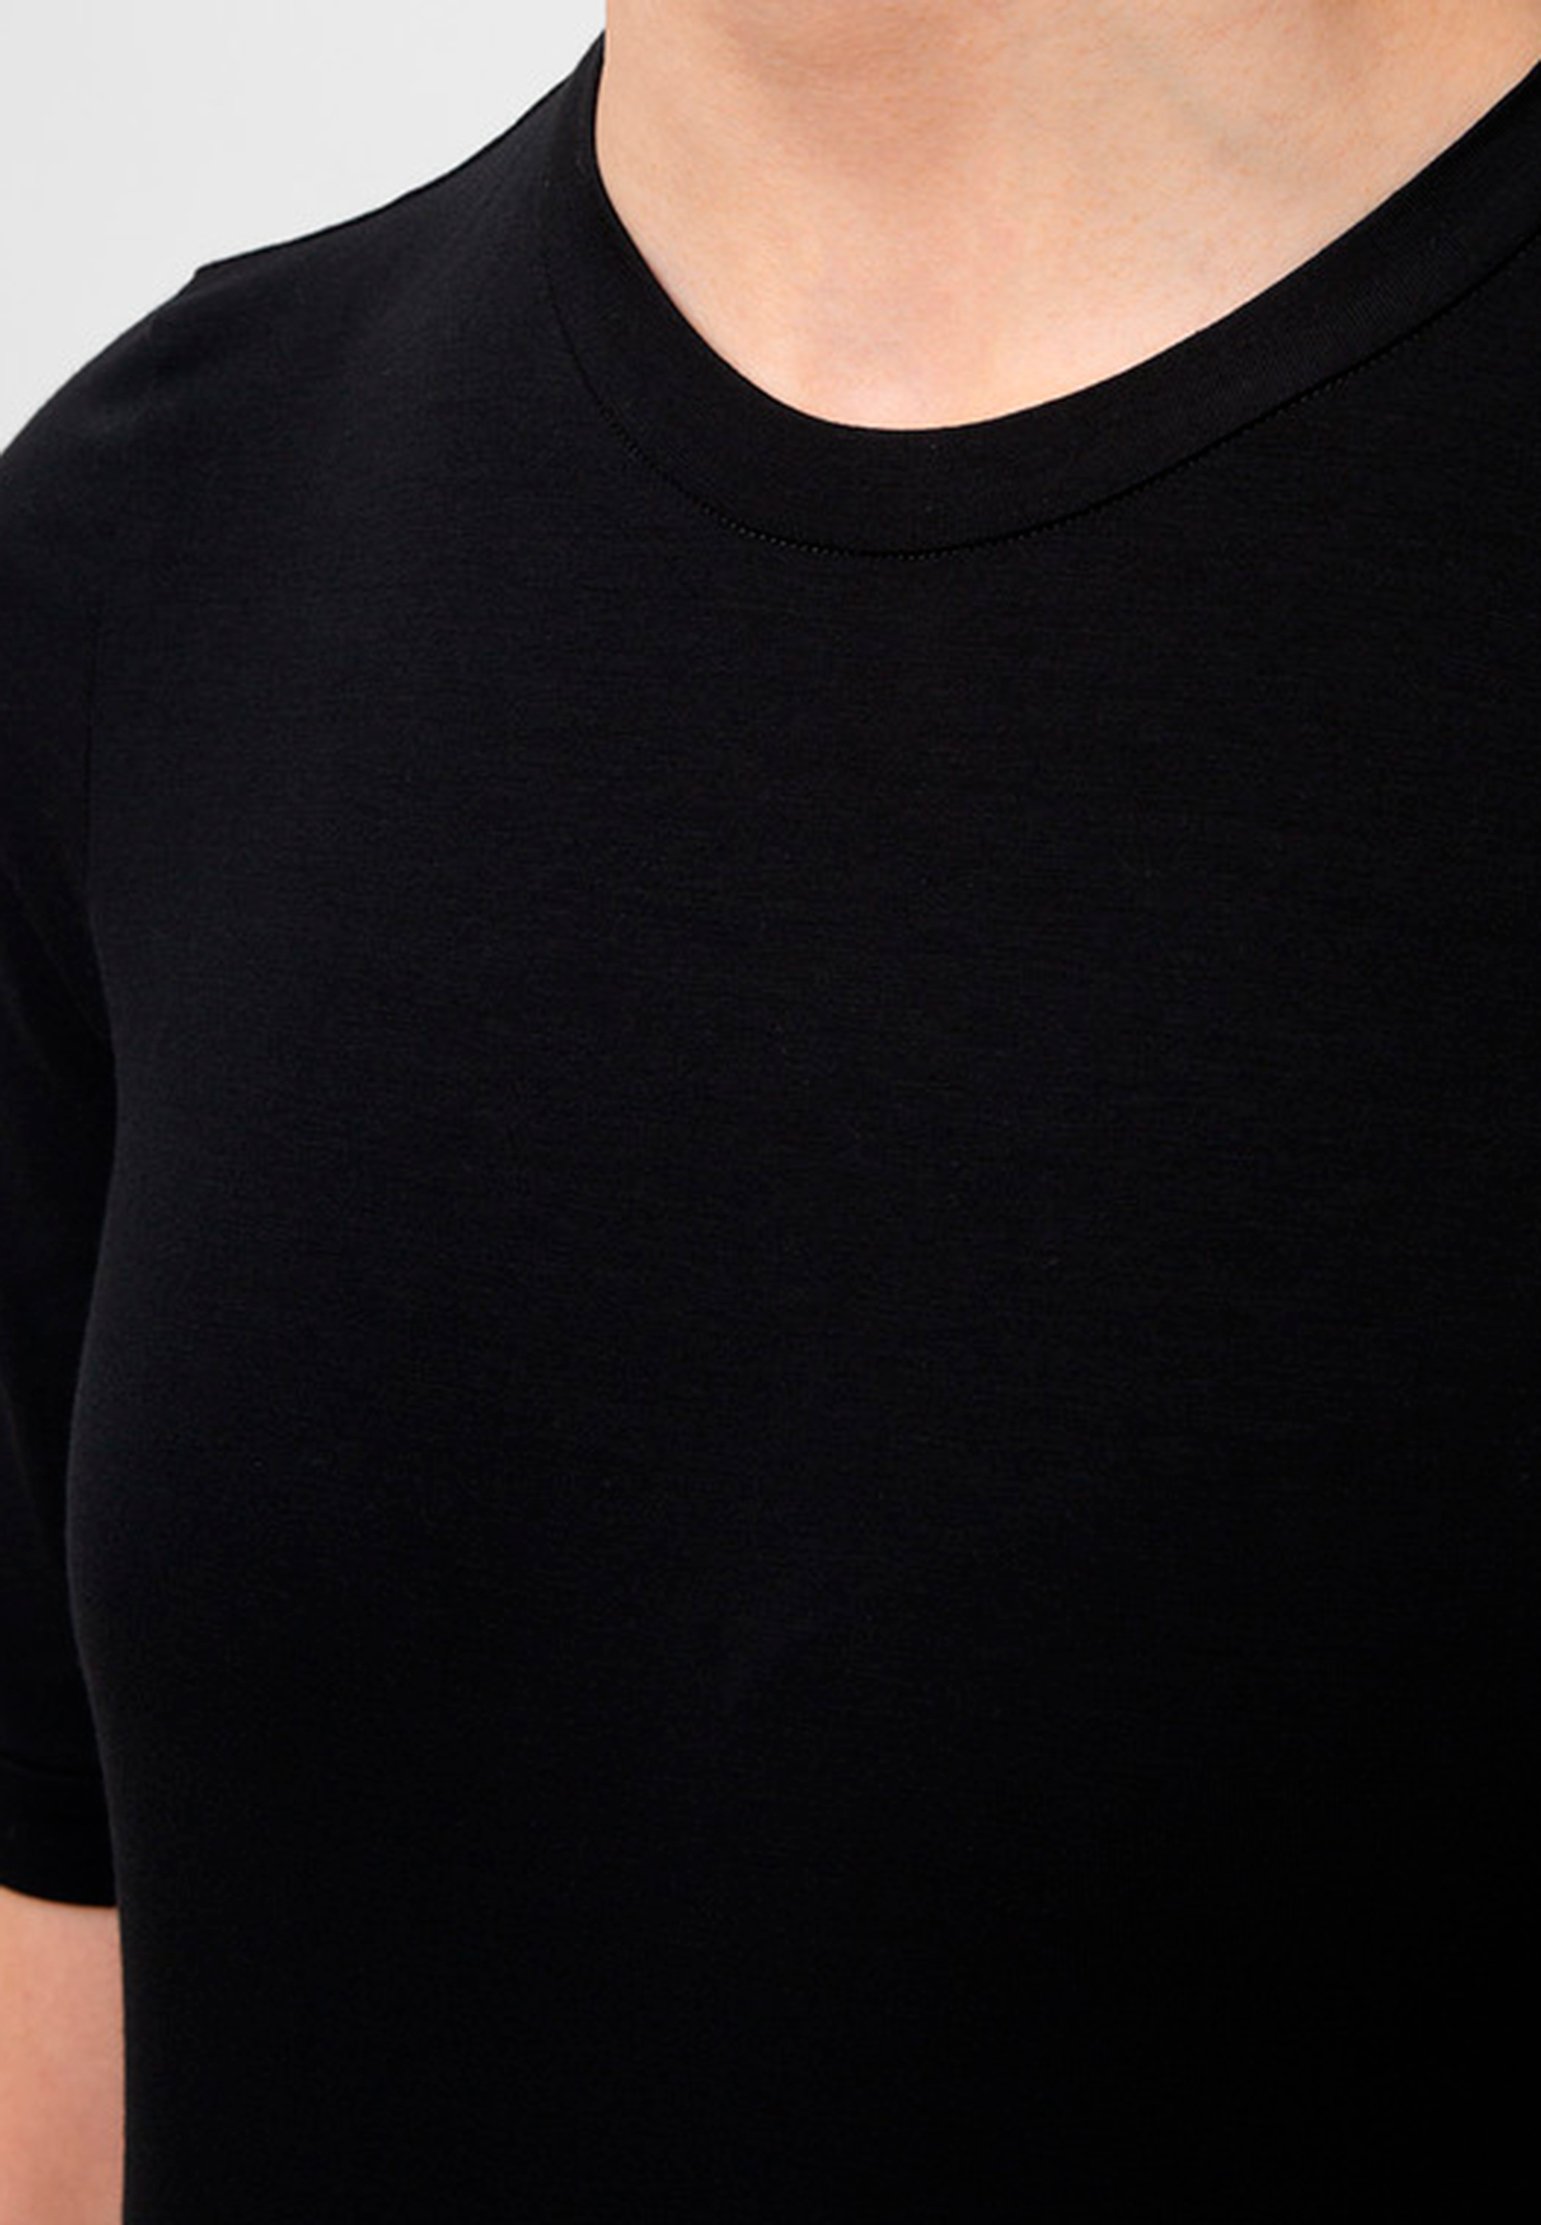 T-Shirt BRUNELLO CUCINELLI Color: black (Code: 634) in online store Allure